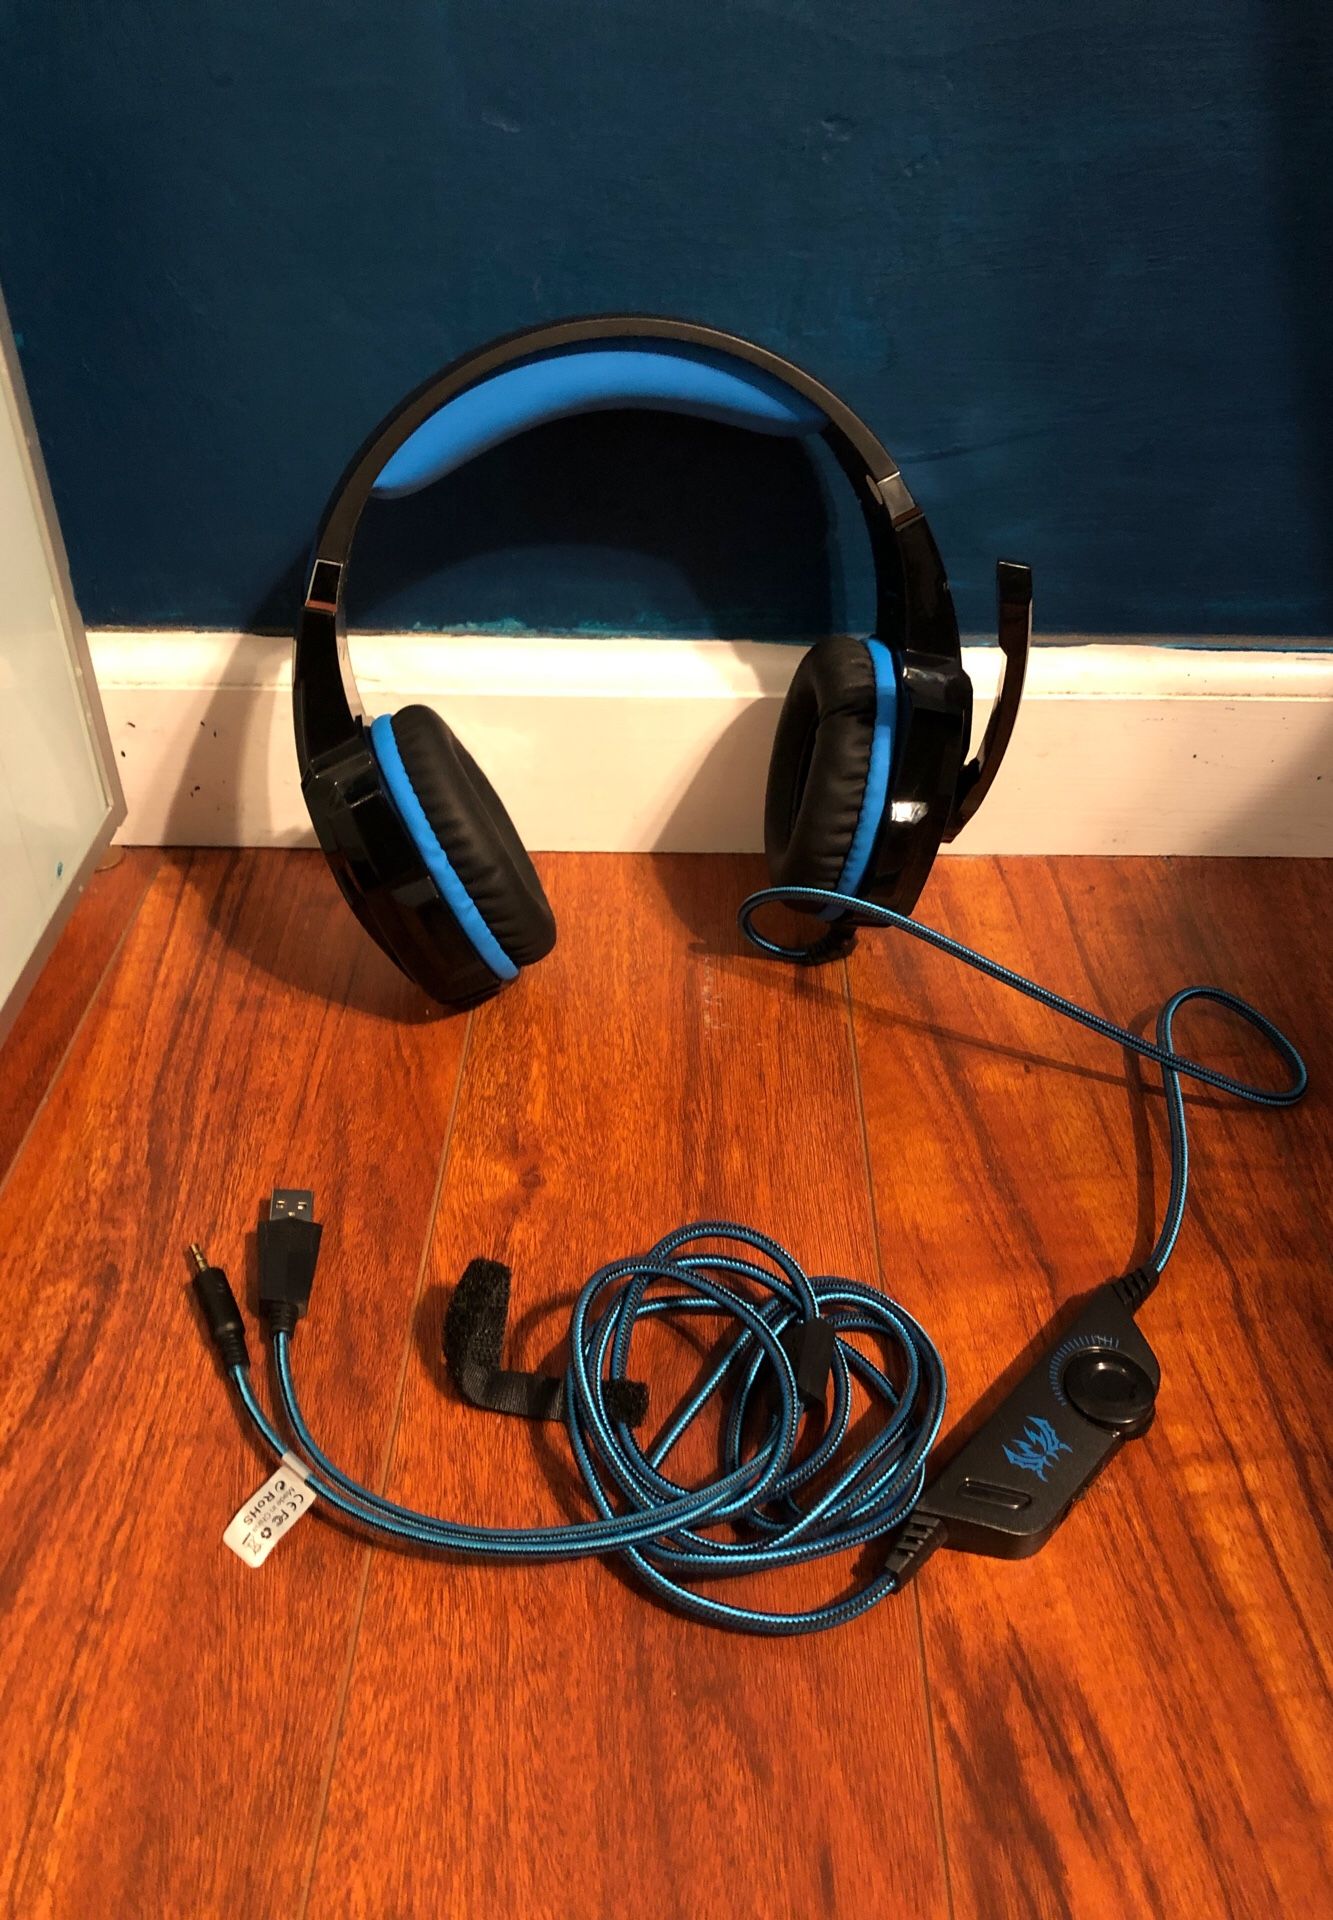 Blue light up headset